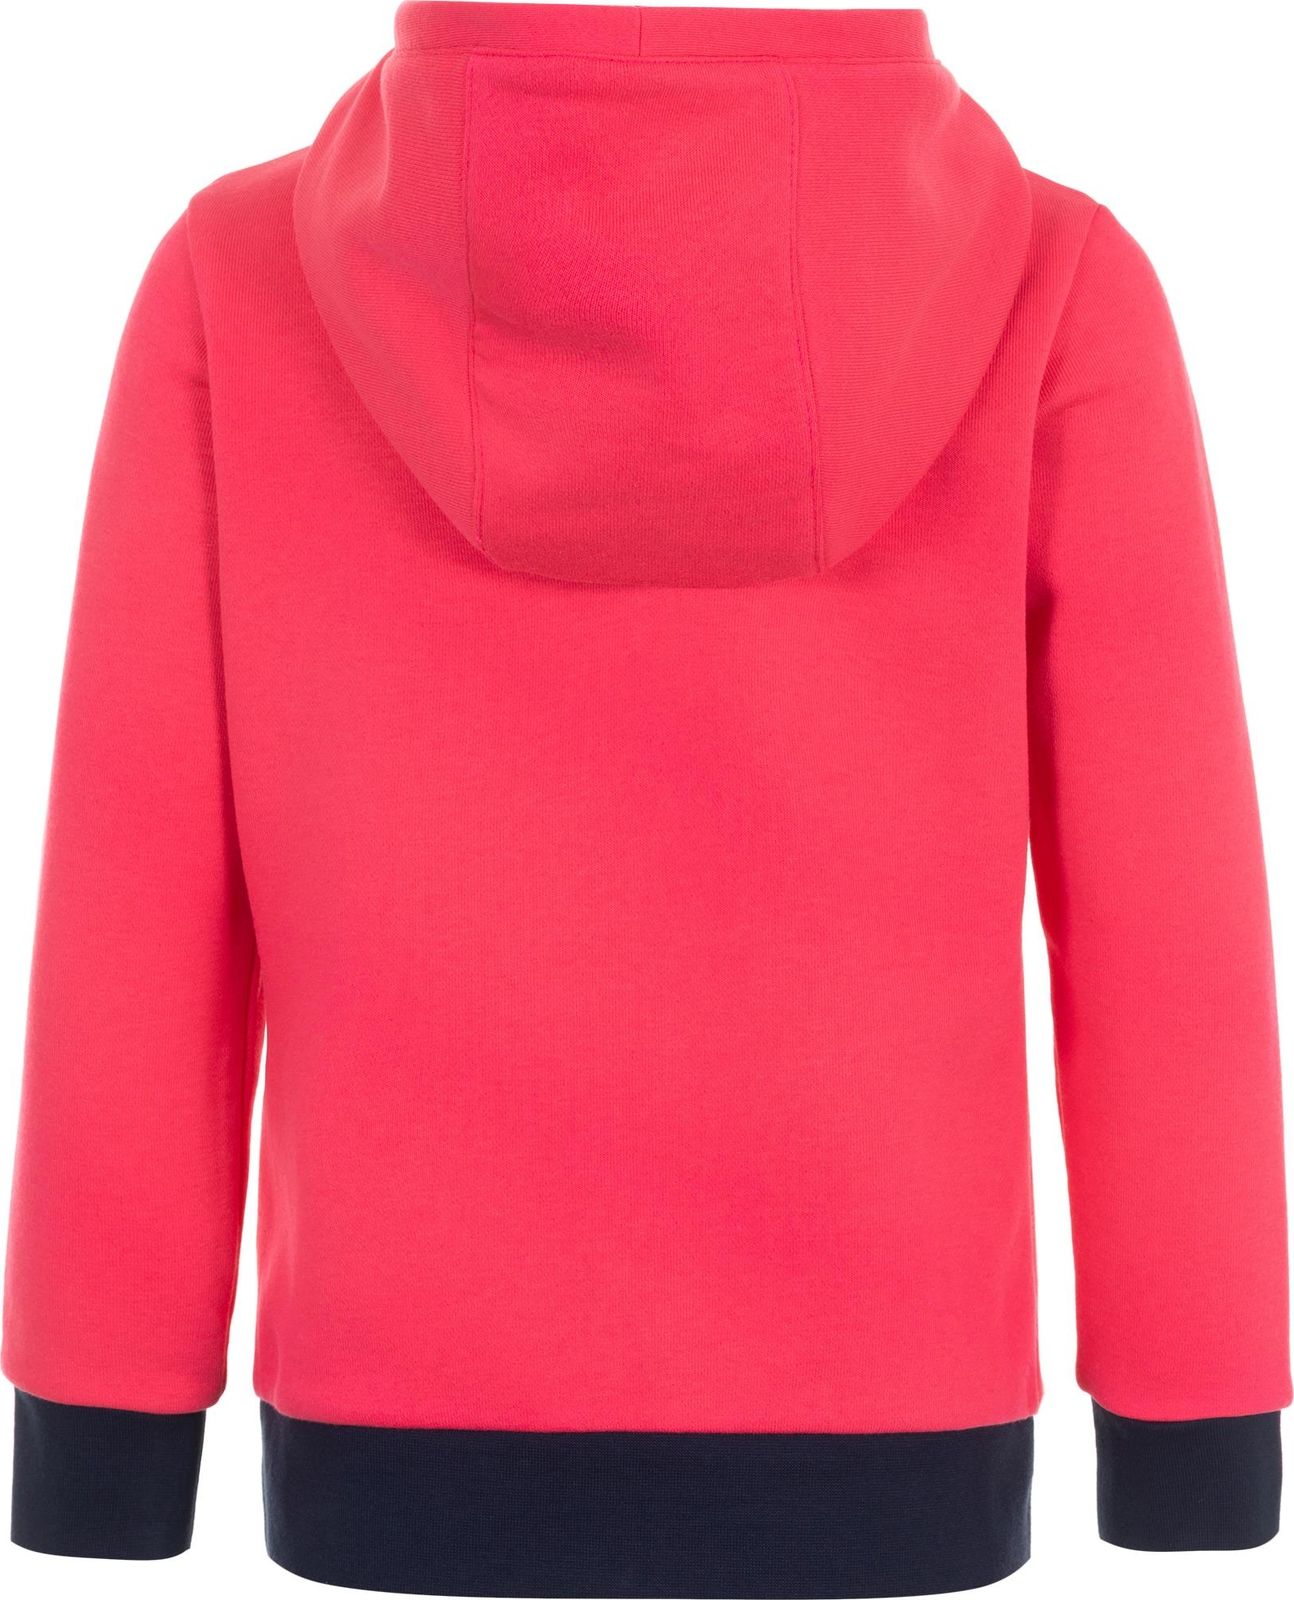    Fila Girls' Knitted Jacket, : . S19AFLJUK01-R0.  110